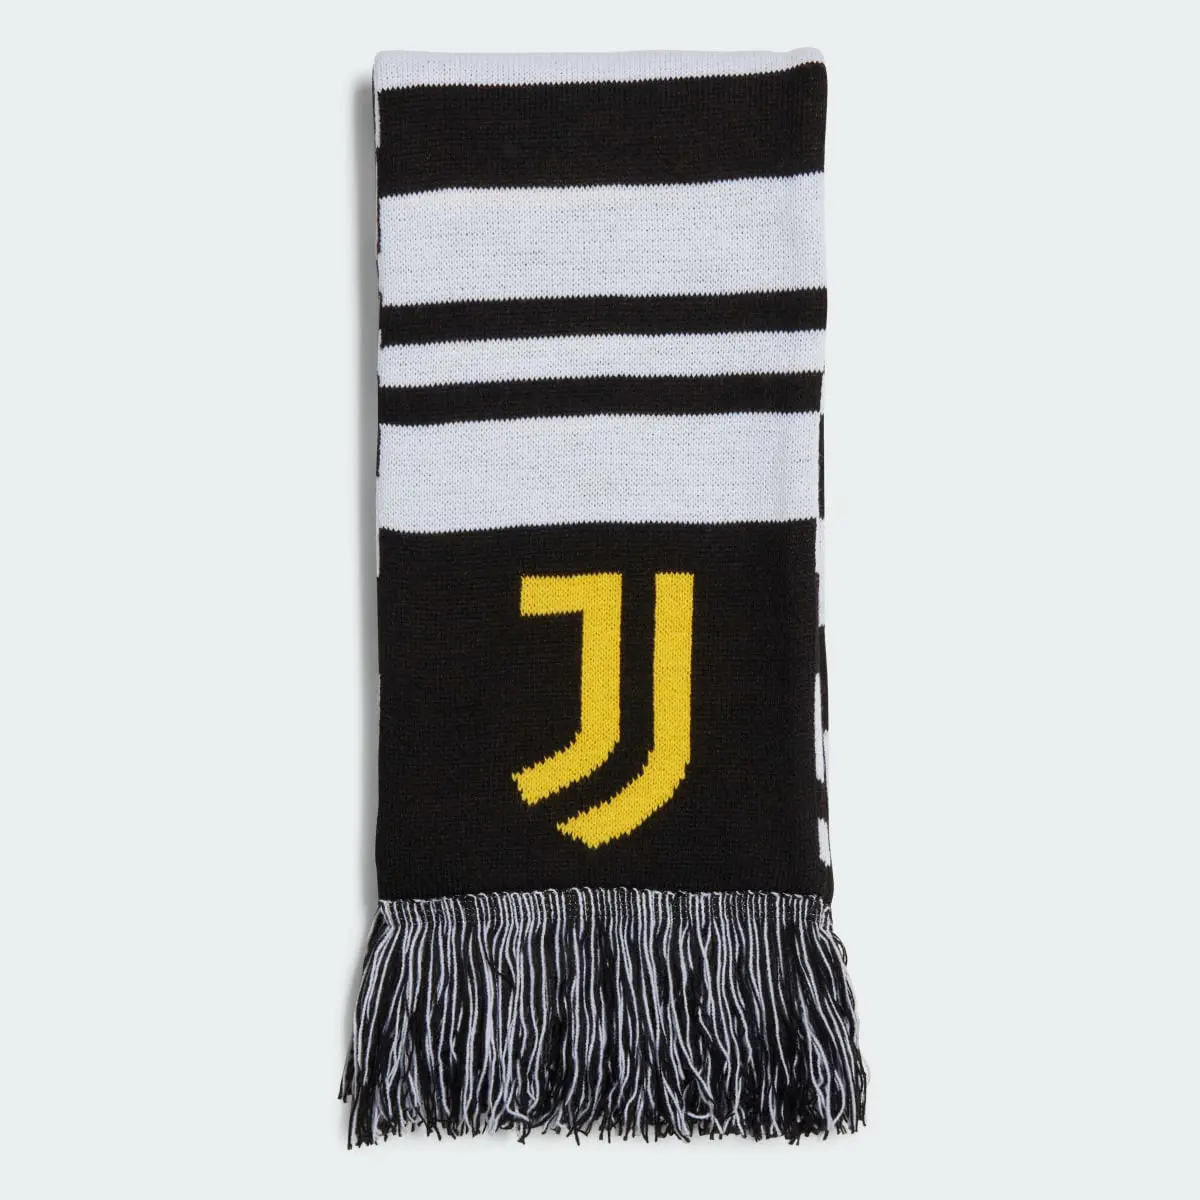 Adidas Juventus Turin Schal. 2